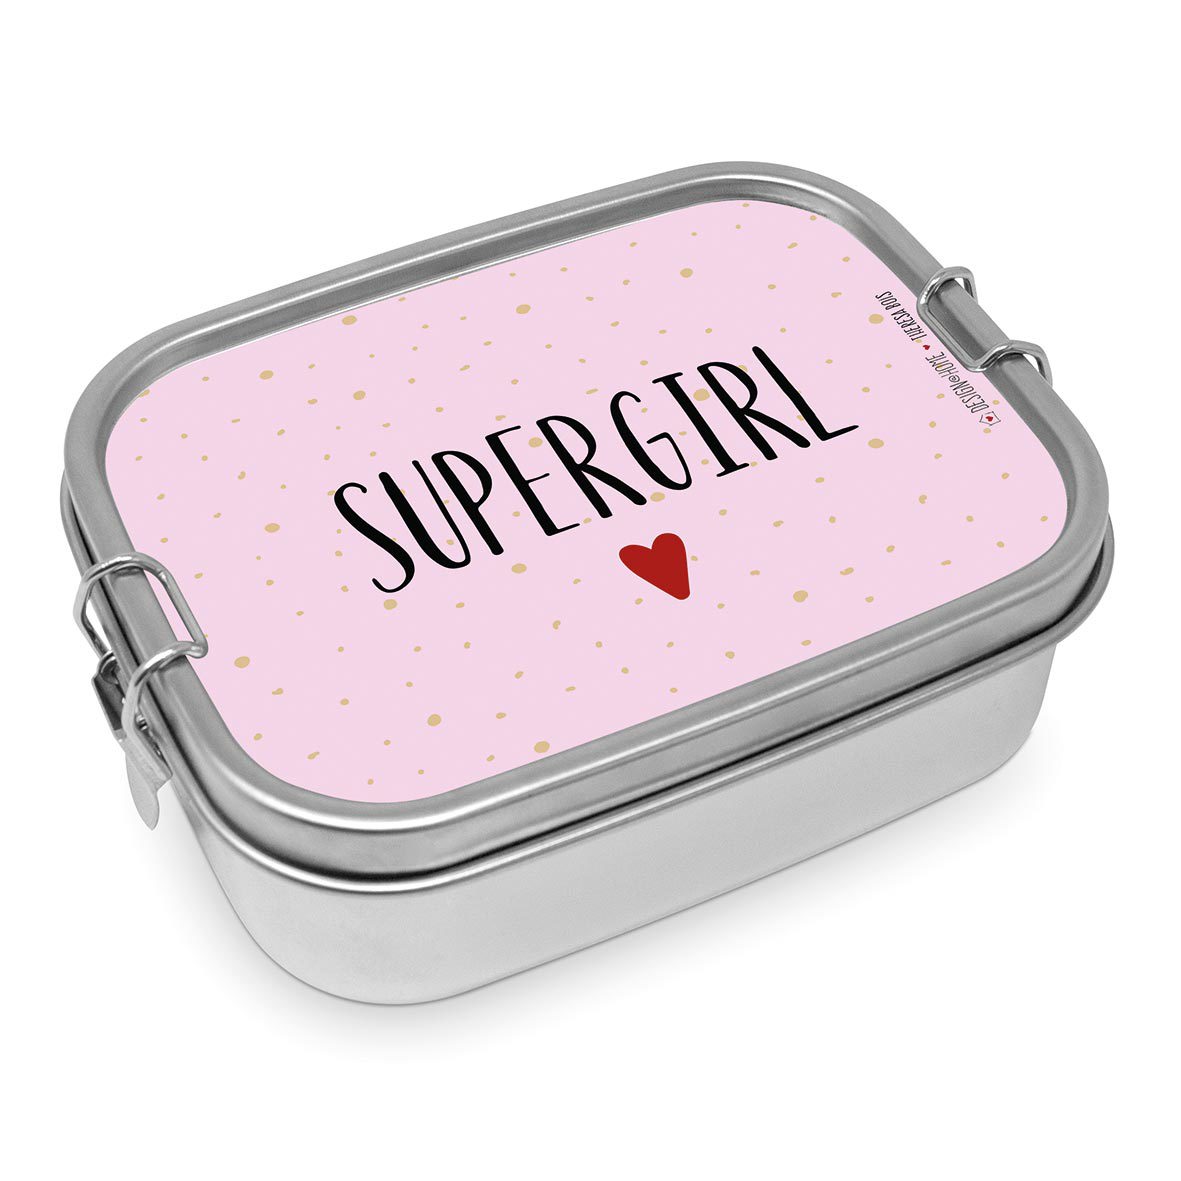 Supergirl Steel Lunch Box